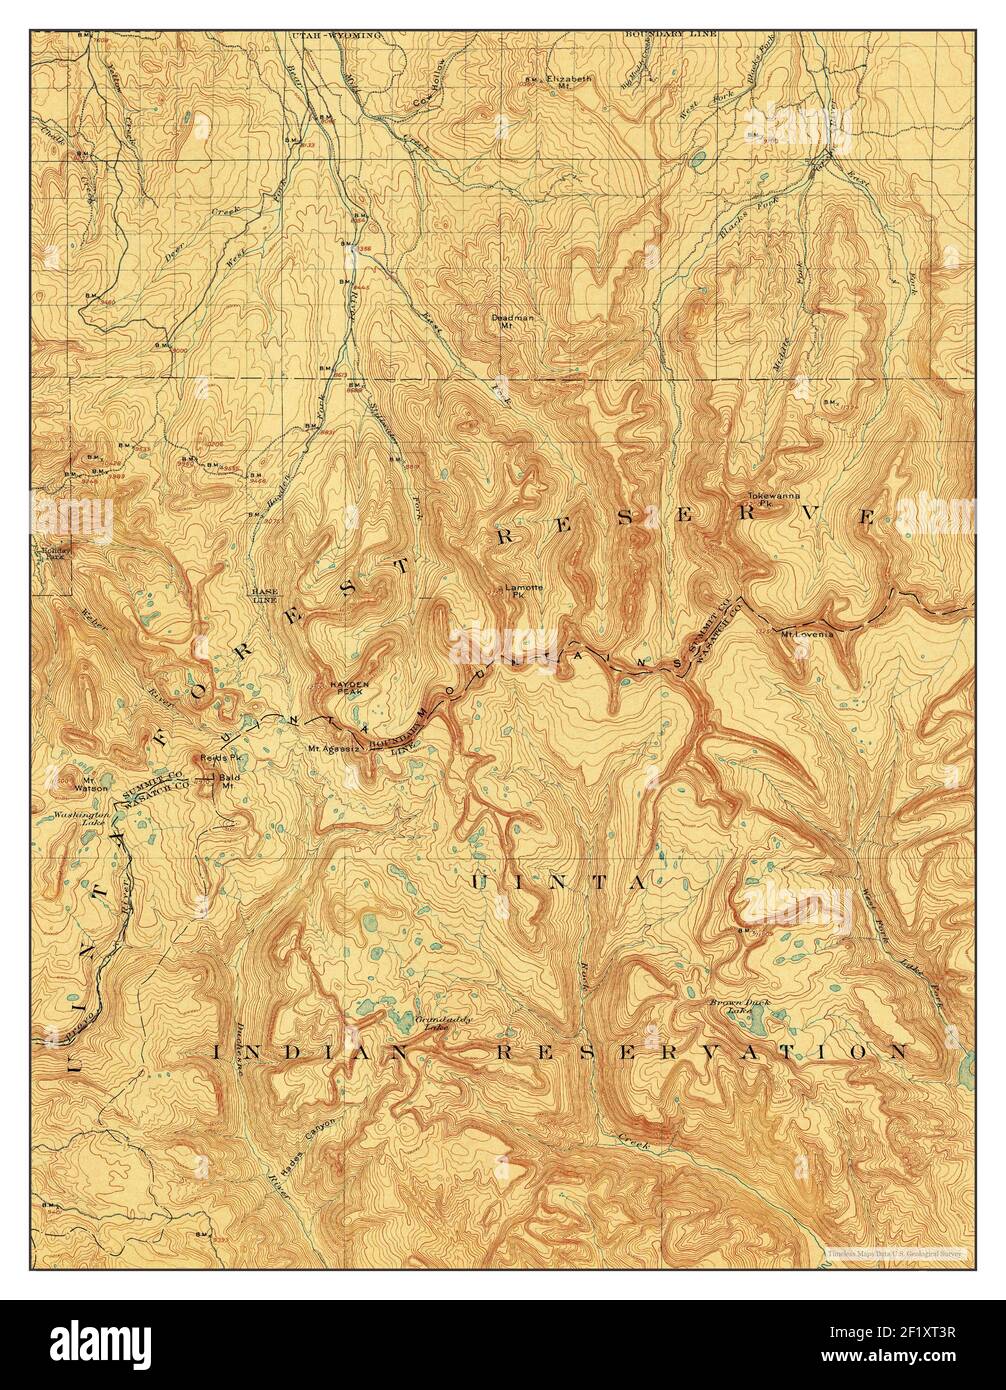 Hayden Peak, Utah, map 1903, 1:125000, United States of America by Timeless Maps, data U.S. Geological Survey Stock Photo